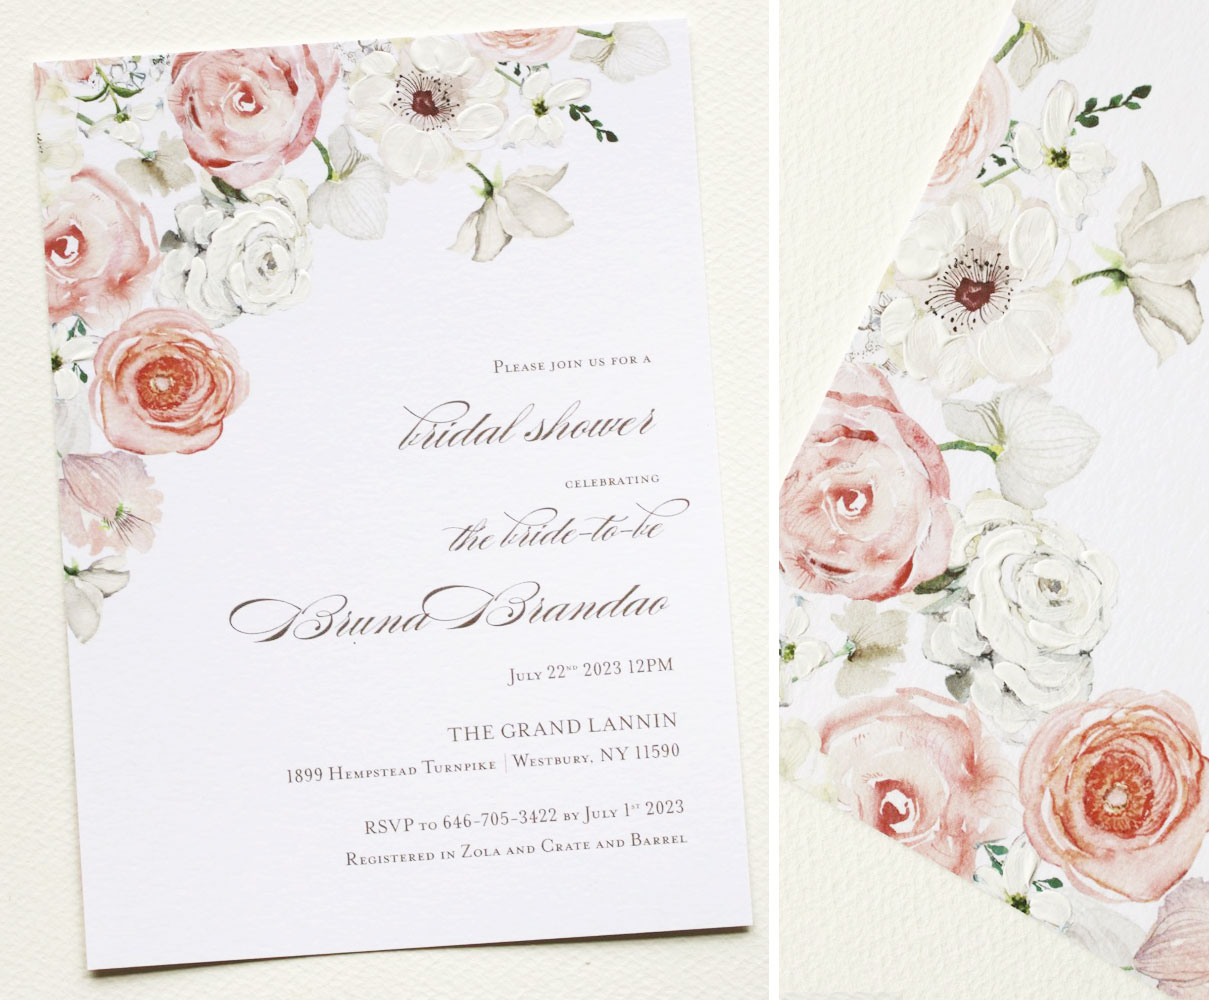 Watercolor Floral Bridal Shower Invitation